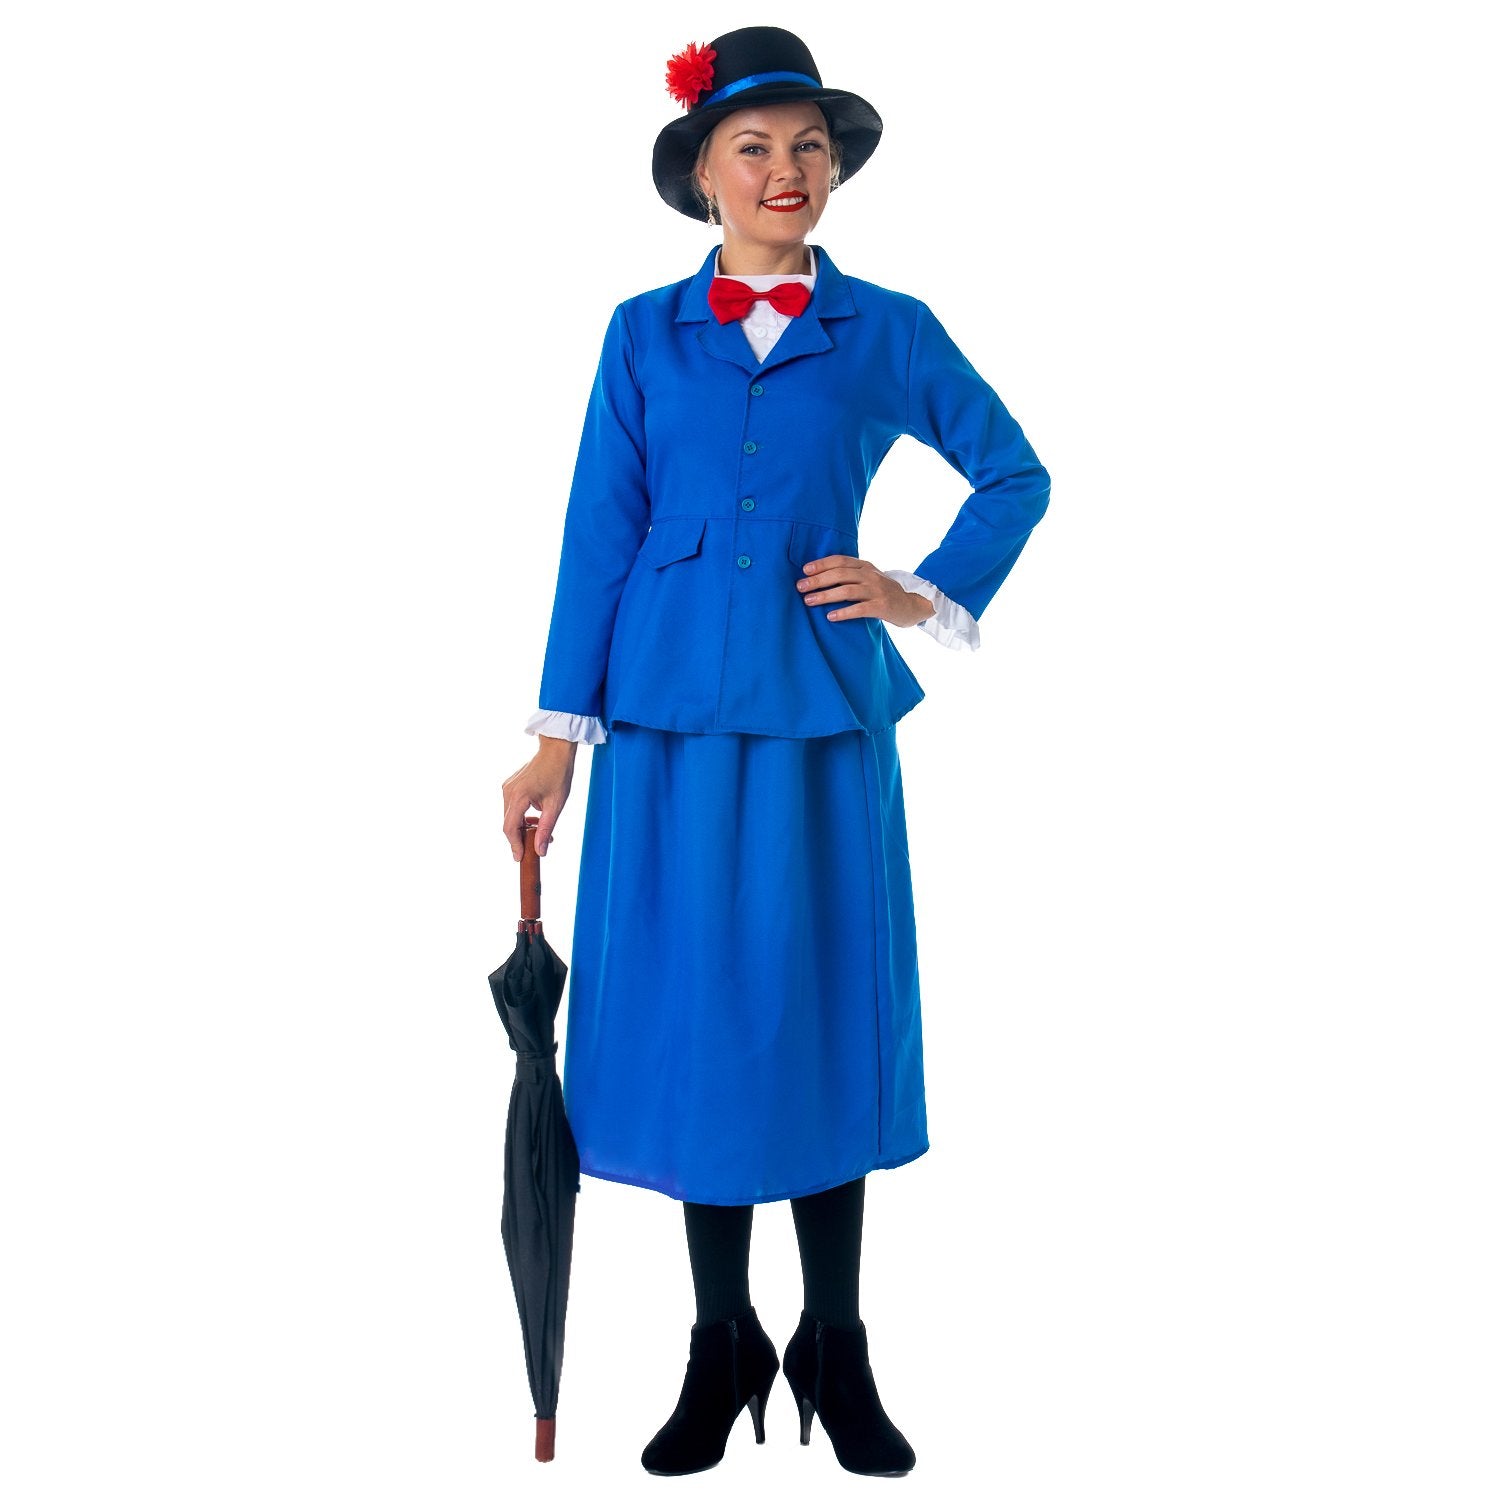 Mary Poppins Fancy Dress Costume.jpeg